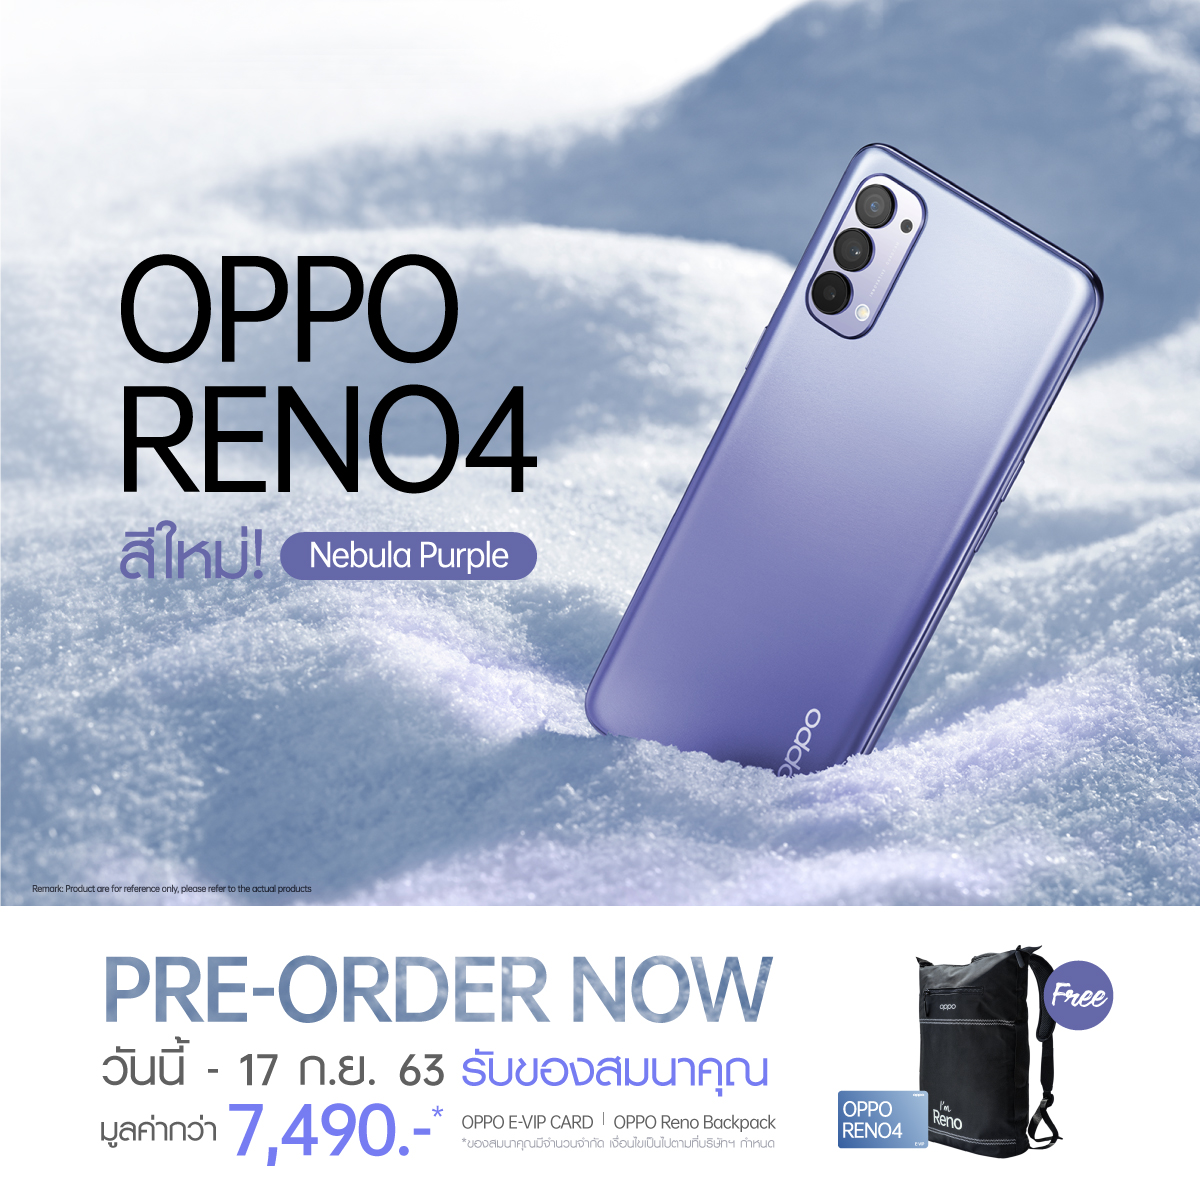 OPPO Reno4 Nebula Purple